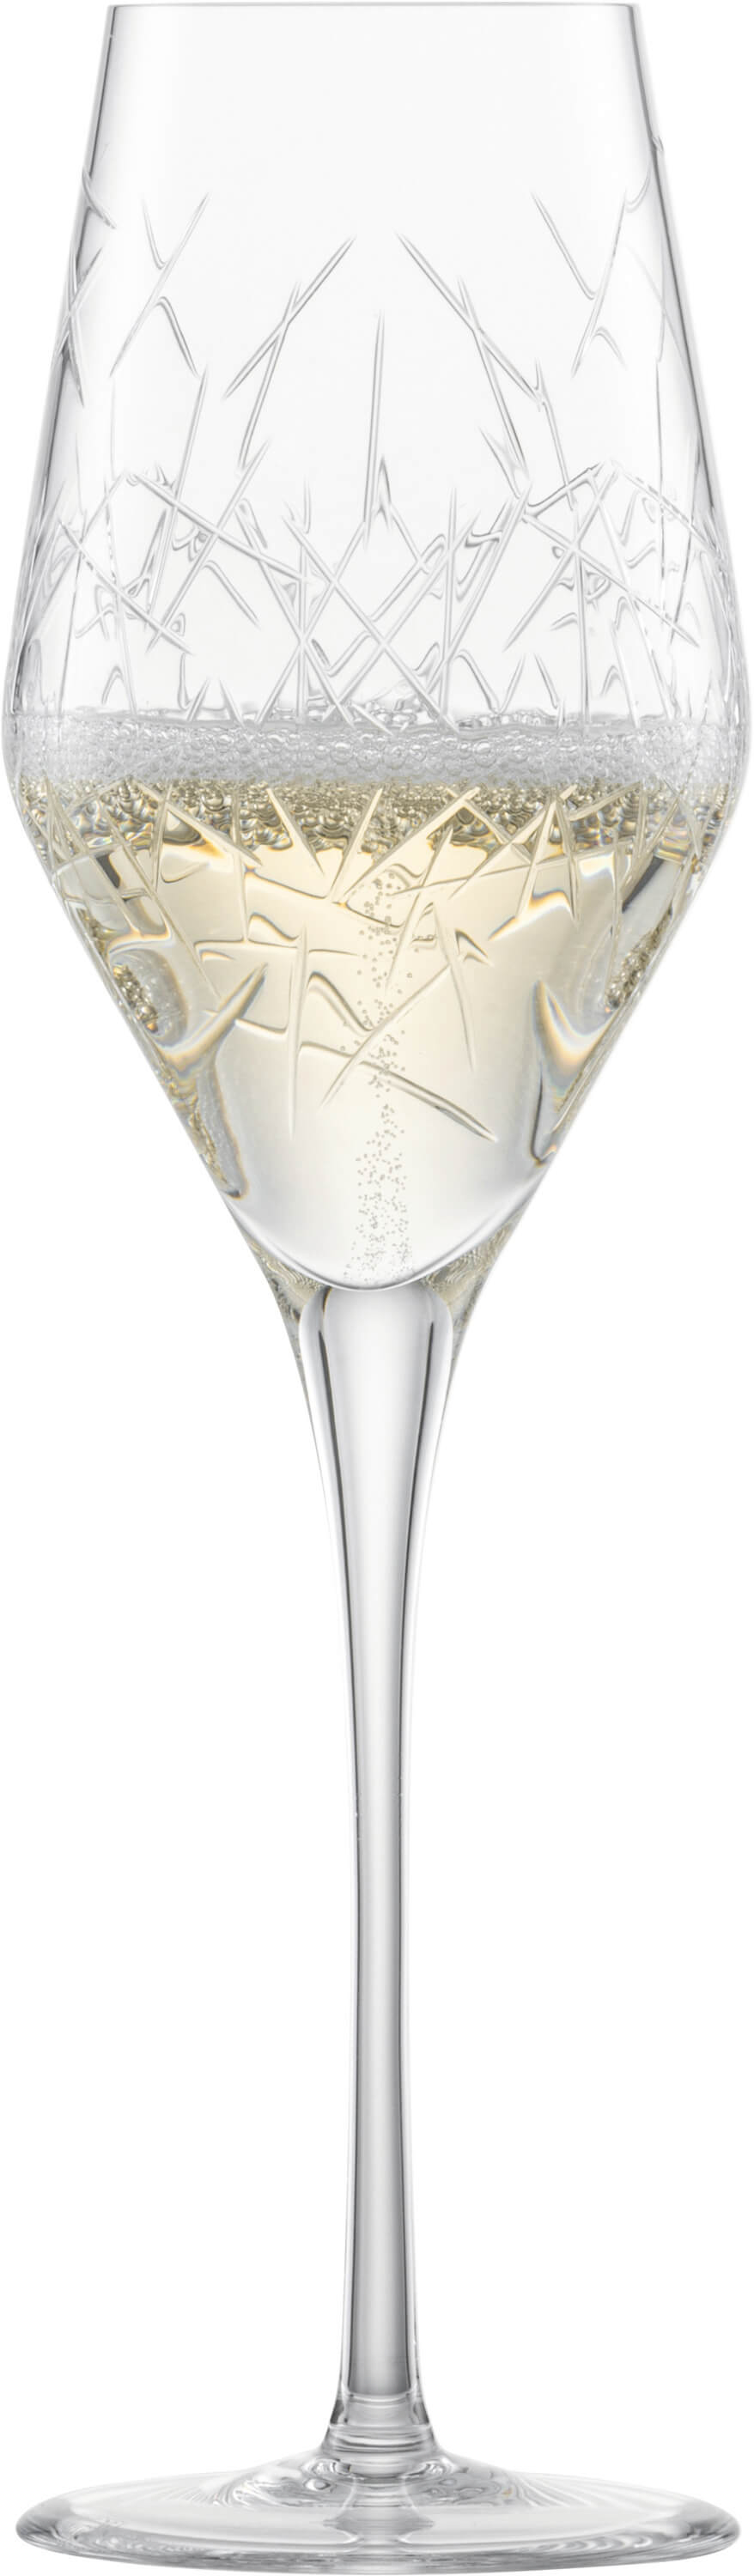 Champagnerglas Hommage Glace, Zwiesel Glas - 272ml (6 Stk.)